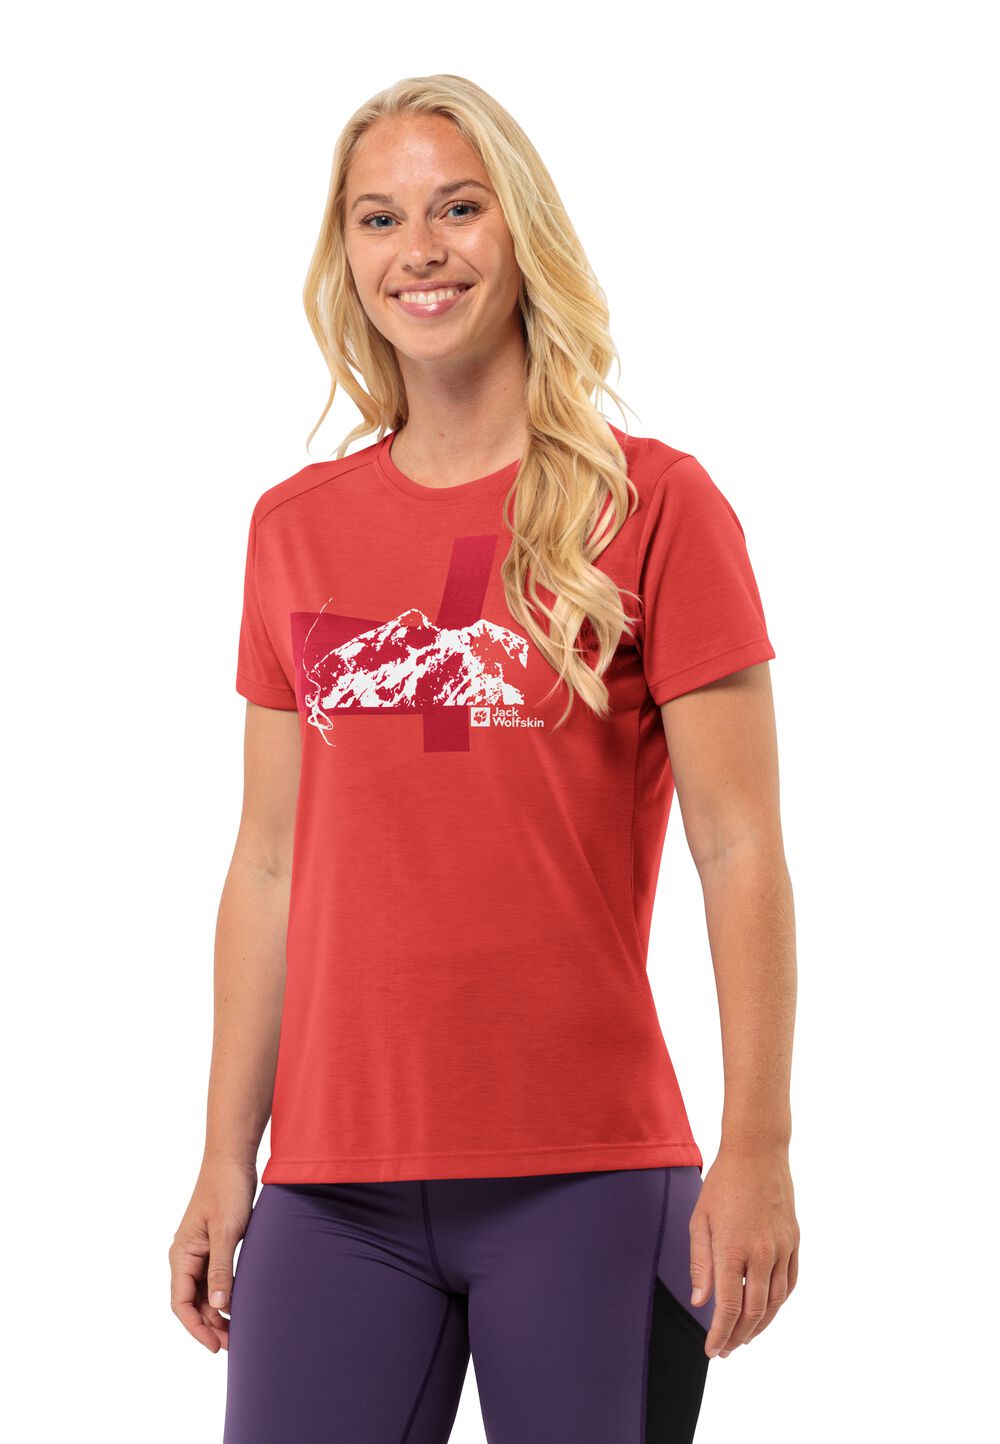 Jack Wolfskin Vonnan S S Graphic T-Shirt Women Functioneel shirt Dames XL rood vibrant red